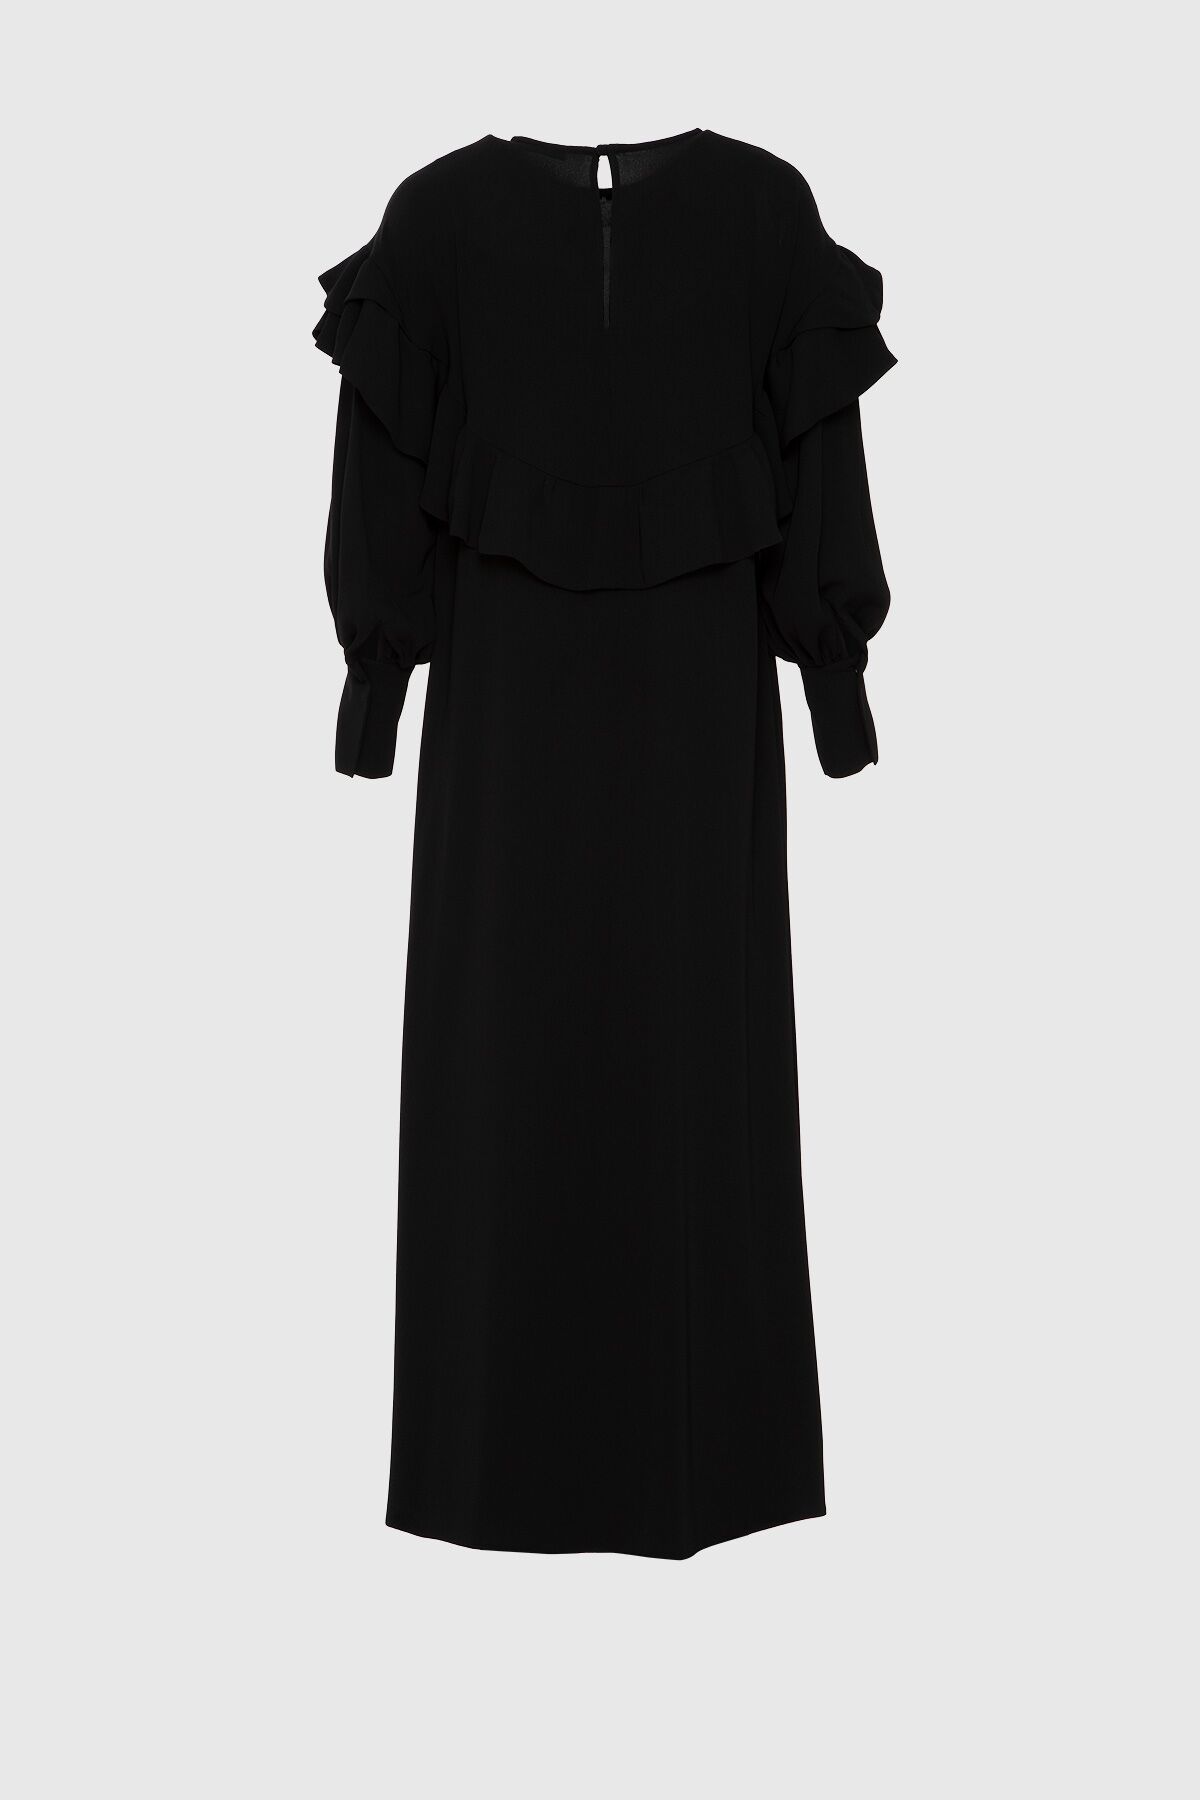  GIZIA - Long Black Dress With Ruffled Sleeves